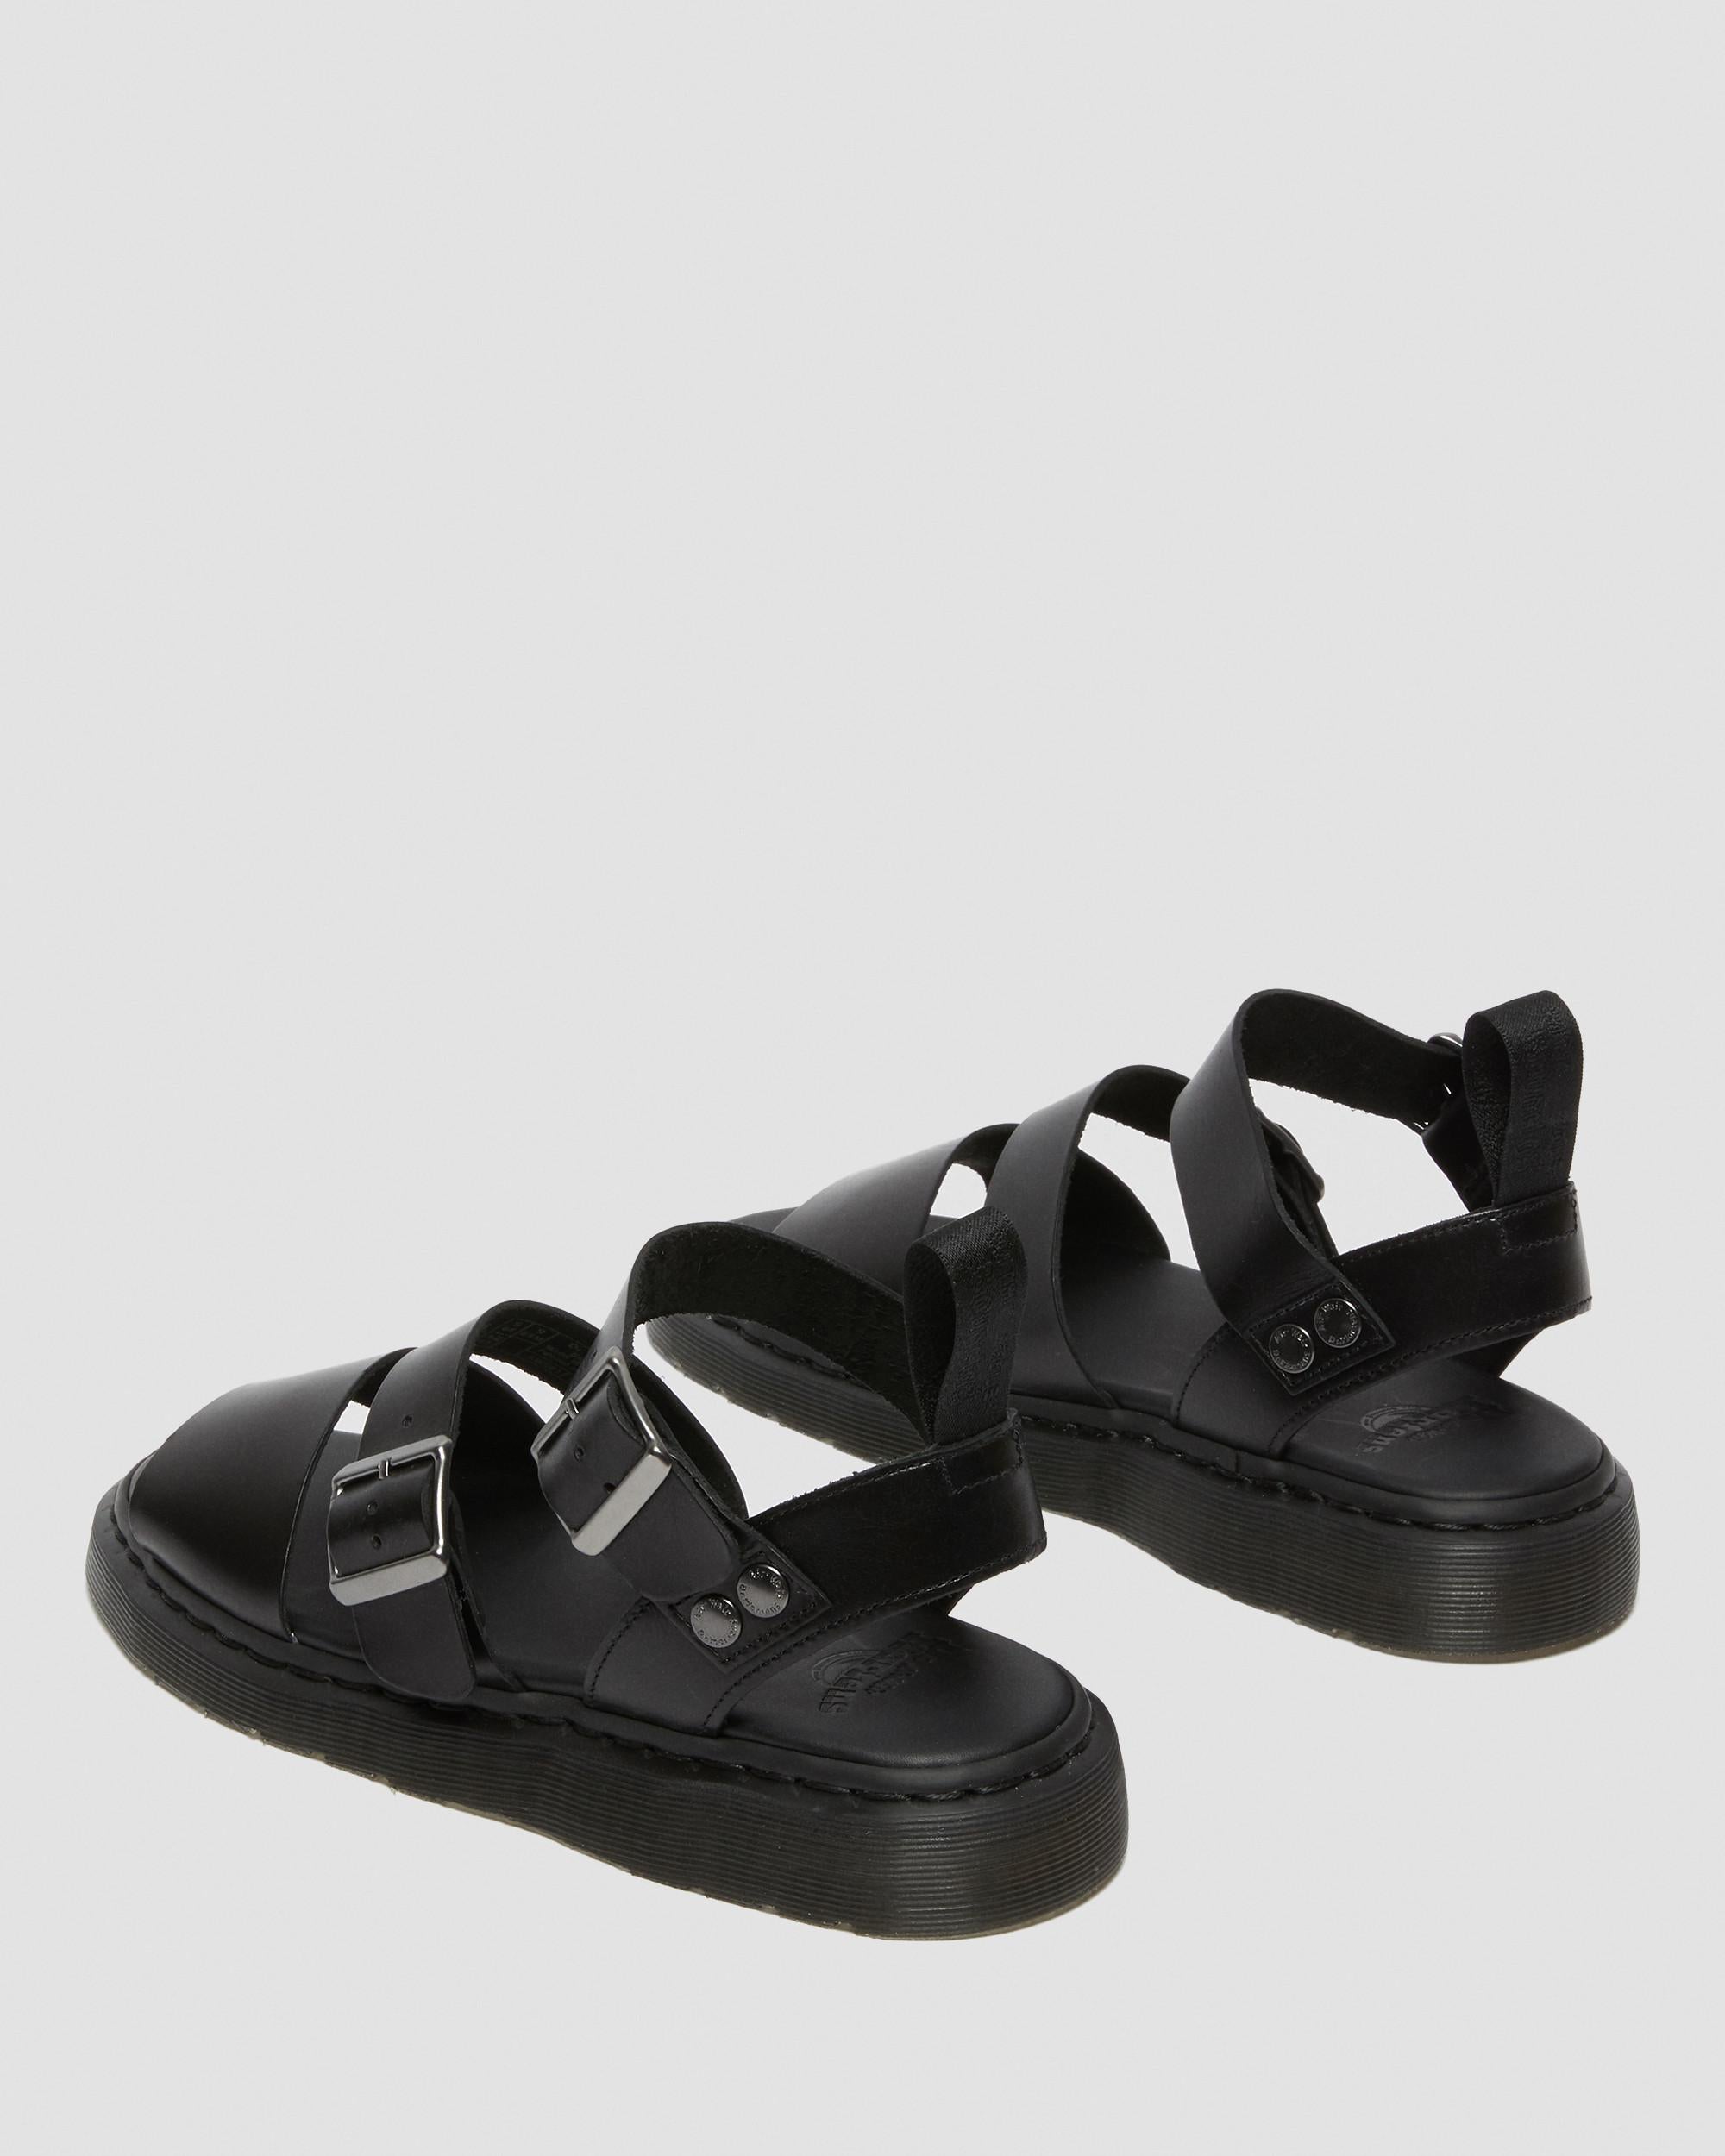 Gryphon Brando Leather Sandals